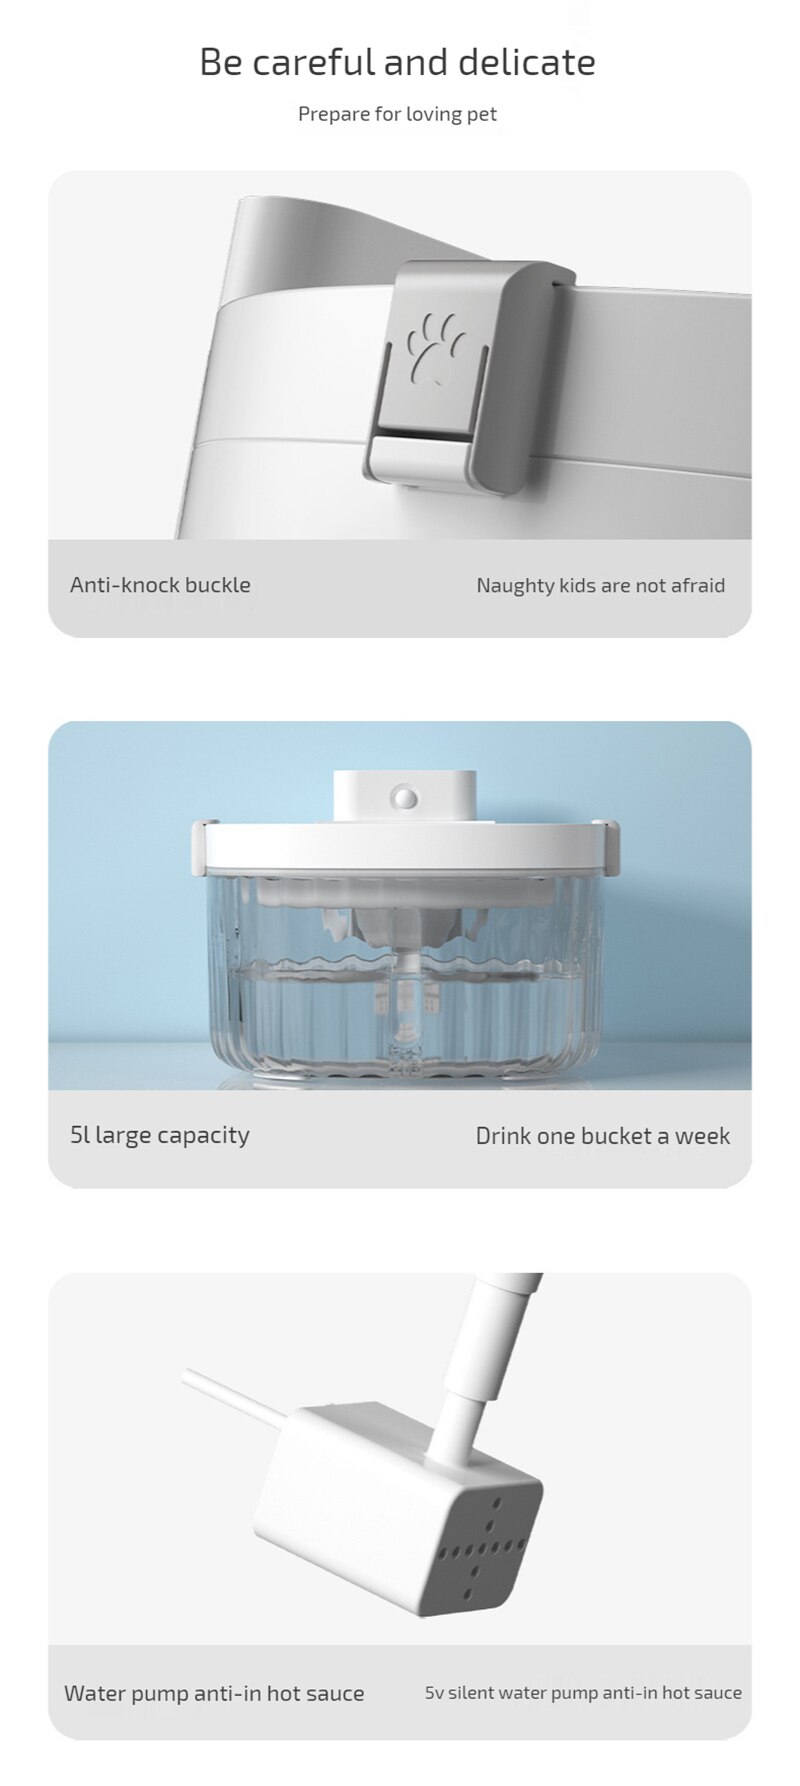 Dispensador de agua automático para gatos y mascotas, fuente de agua con circulación inalámbrica inteligente, tazón de agua para perros, alimentador con filtro para beber